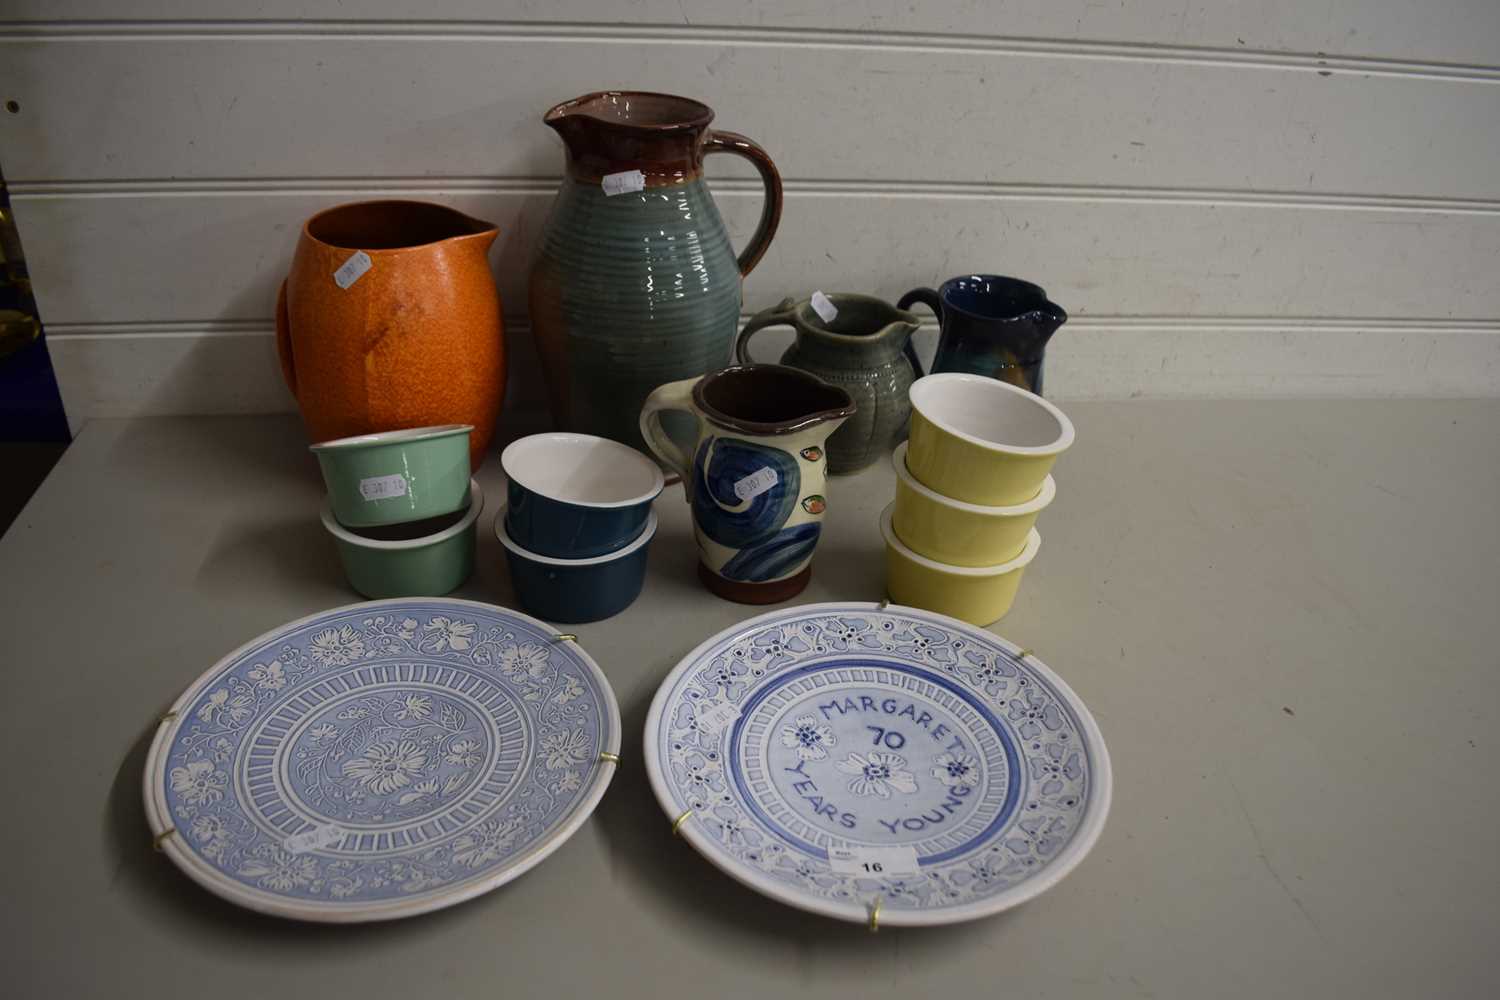 Mixed Lot: Terrington Pottery plates, various jugs, shaving mirror etc - Image 2 of 2